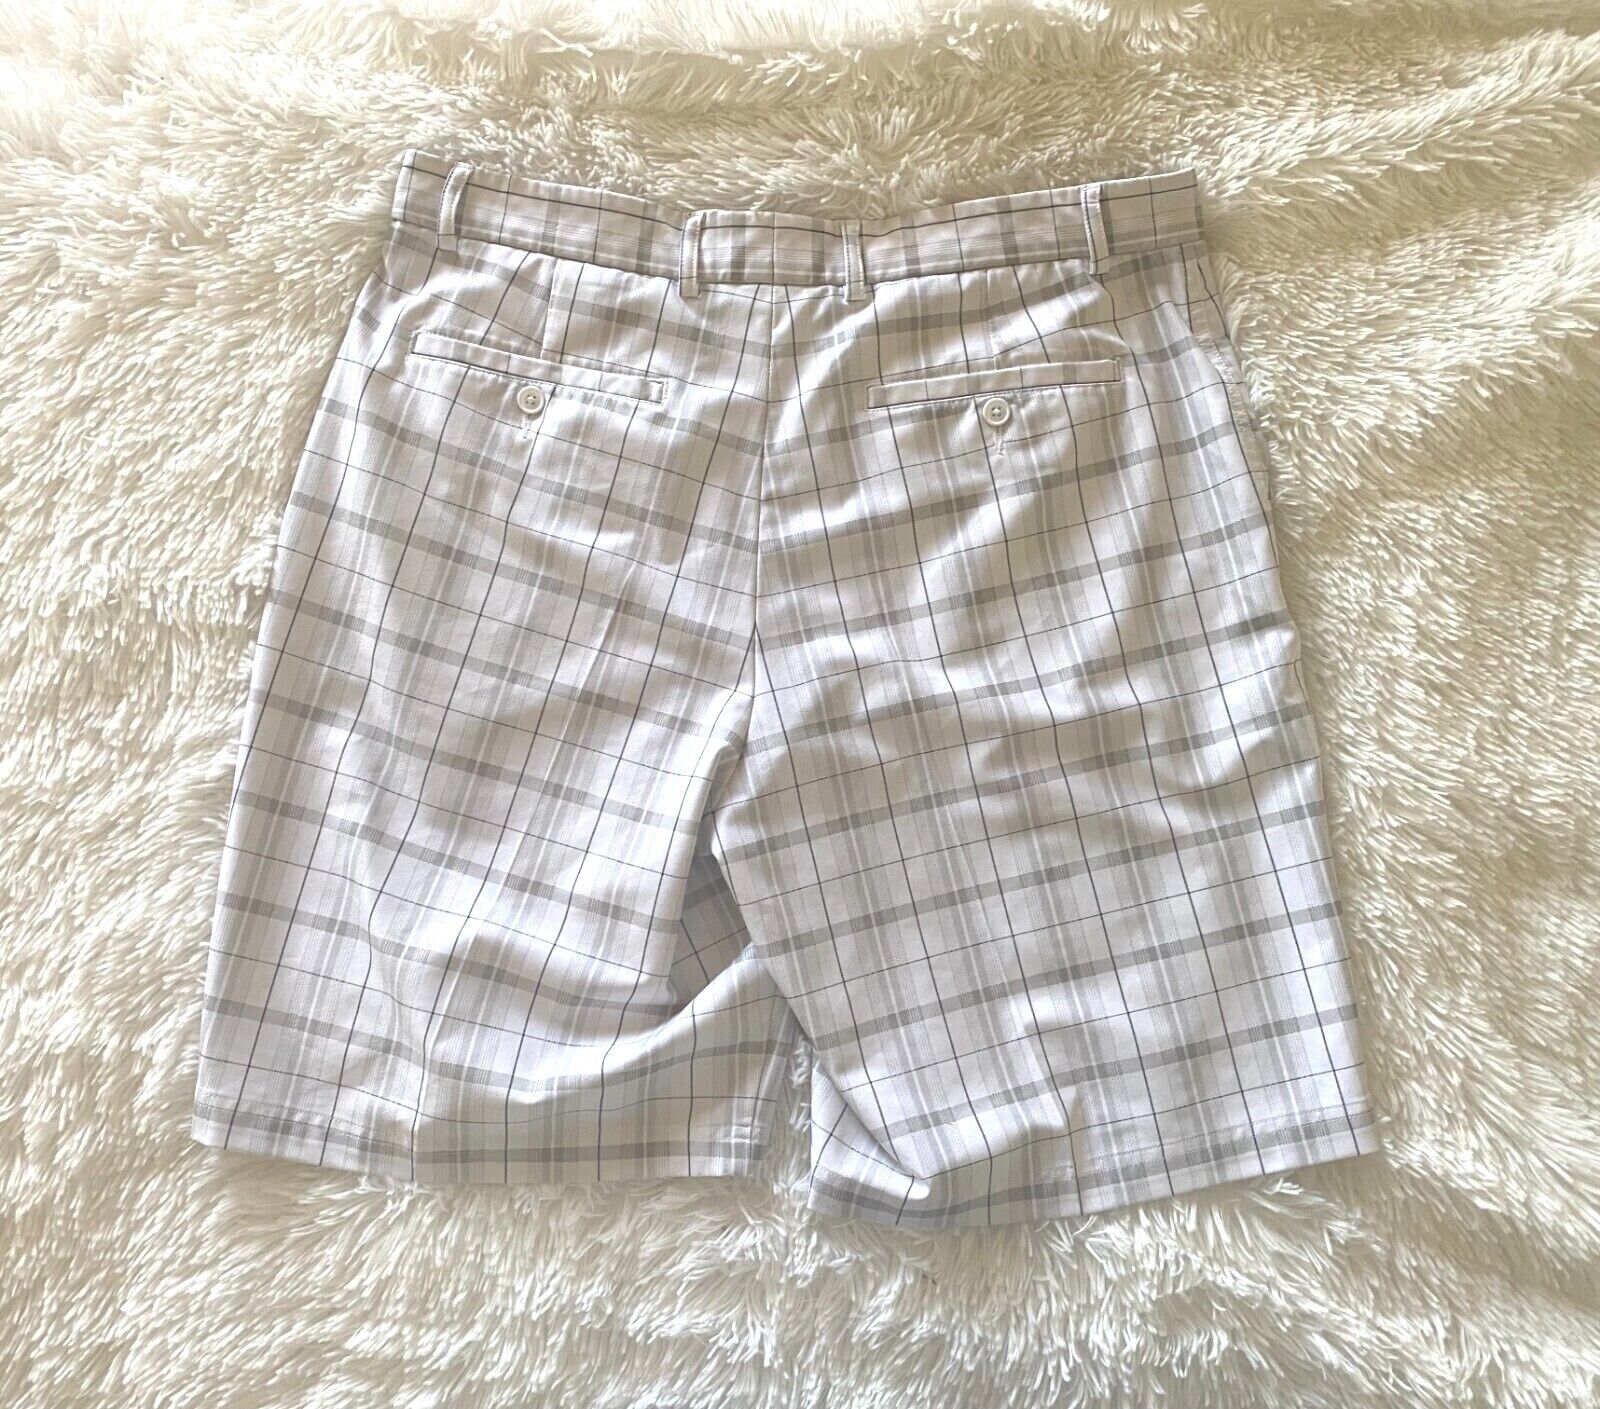 Kirkland Signature Men's Shorts White Gray Plaid Flat… - Gem